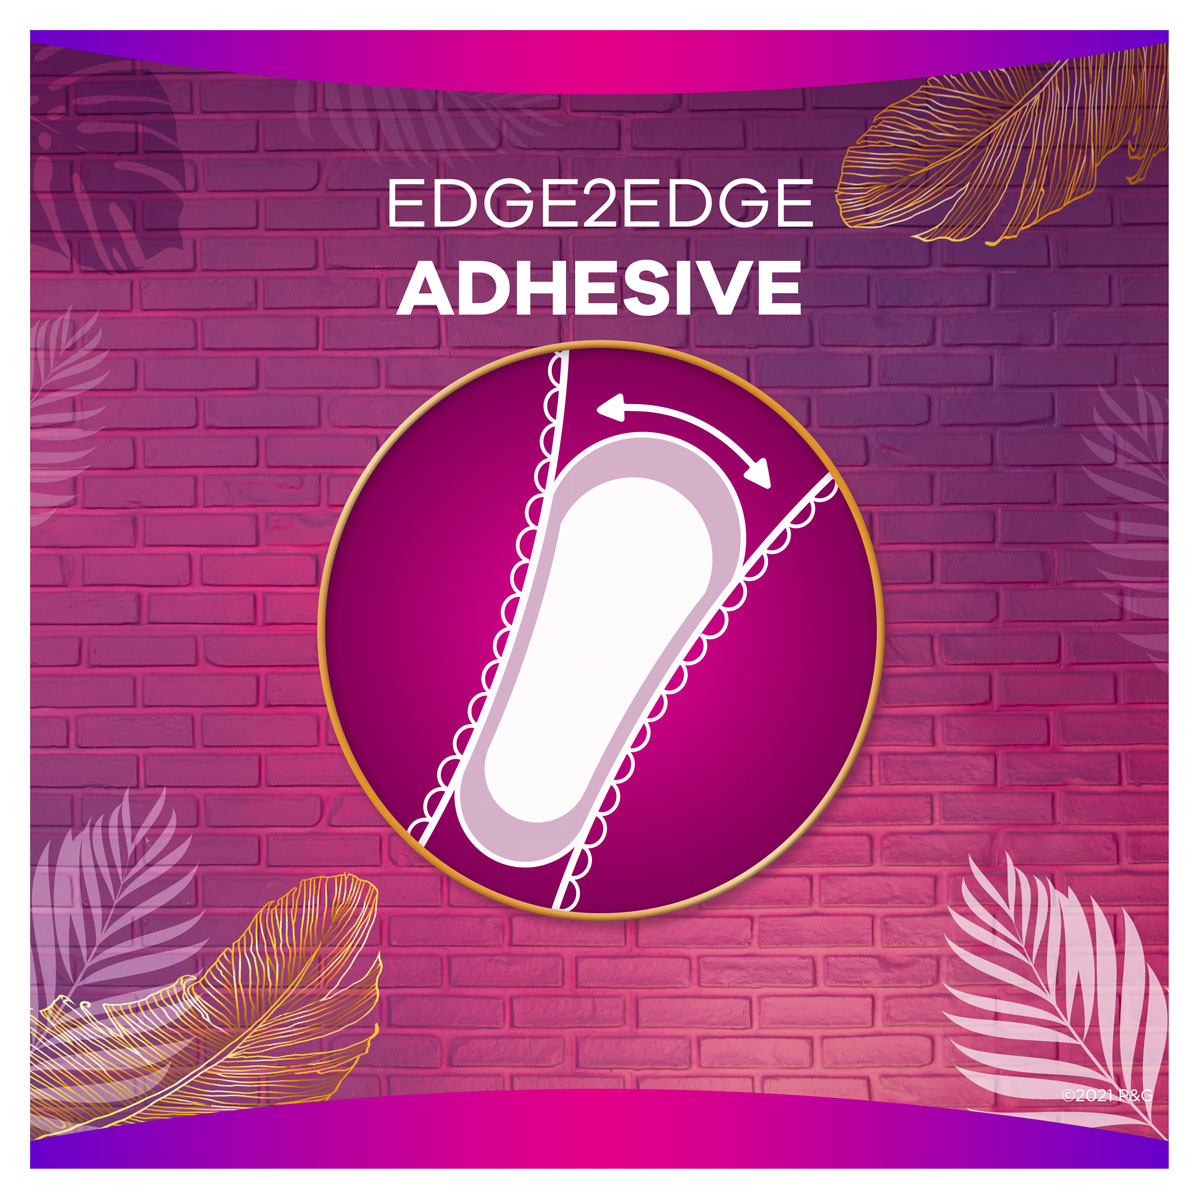 Always-Radiant-Edge2Edge-Adhesive